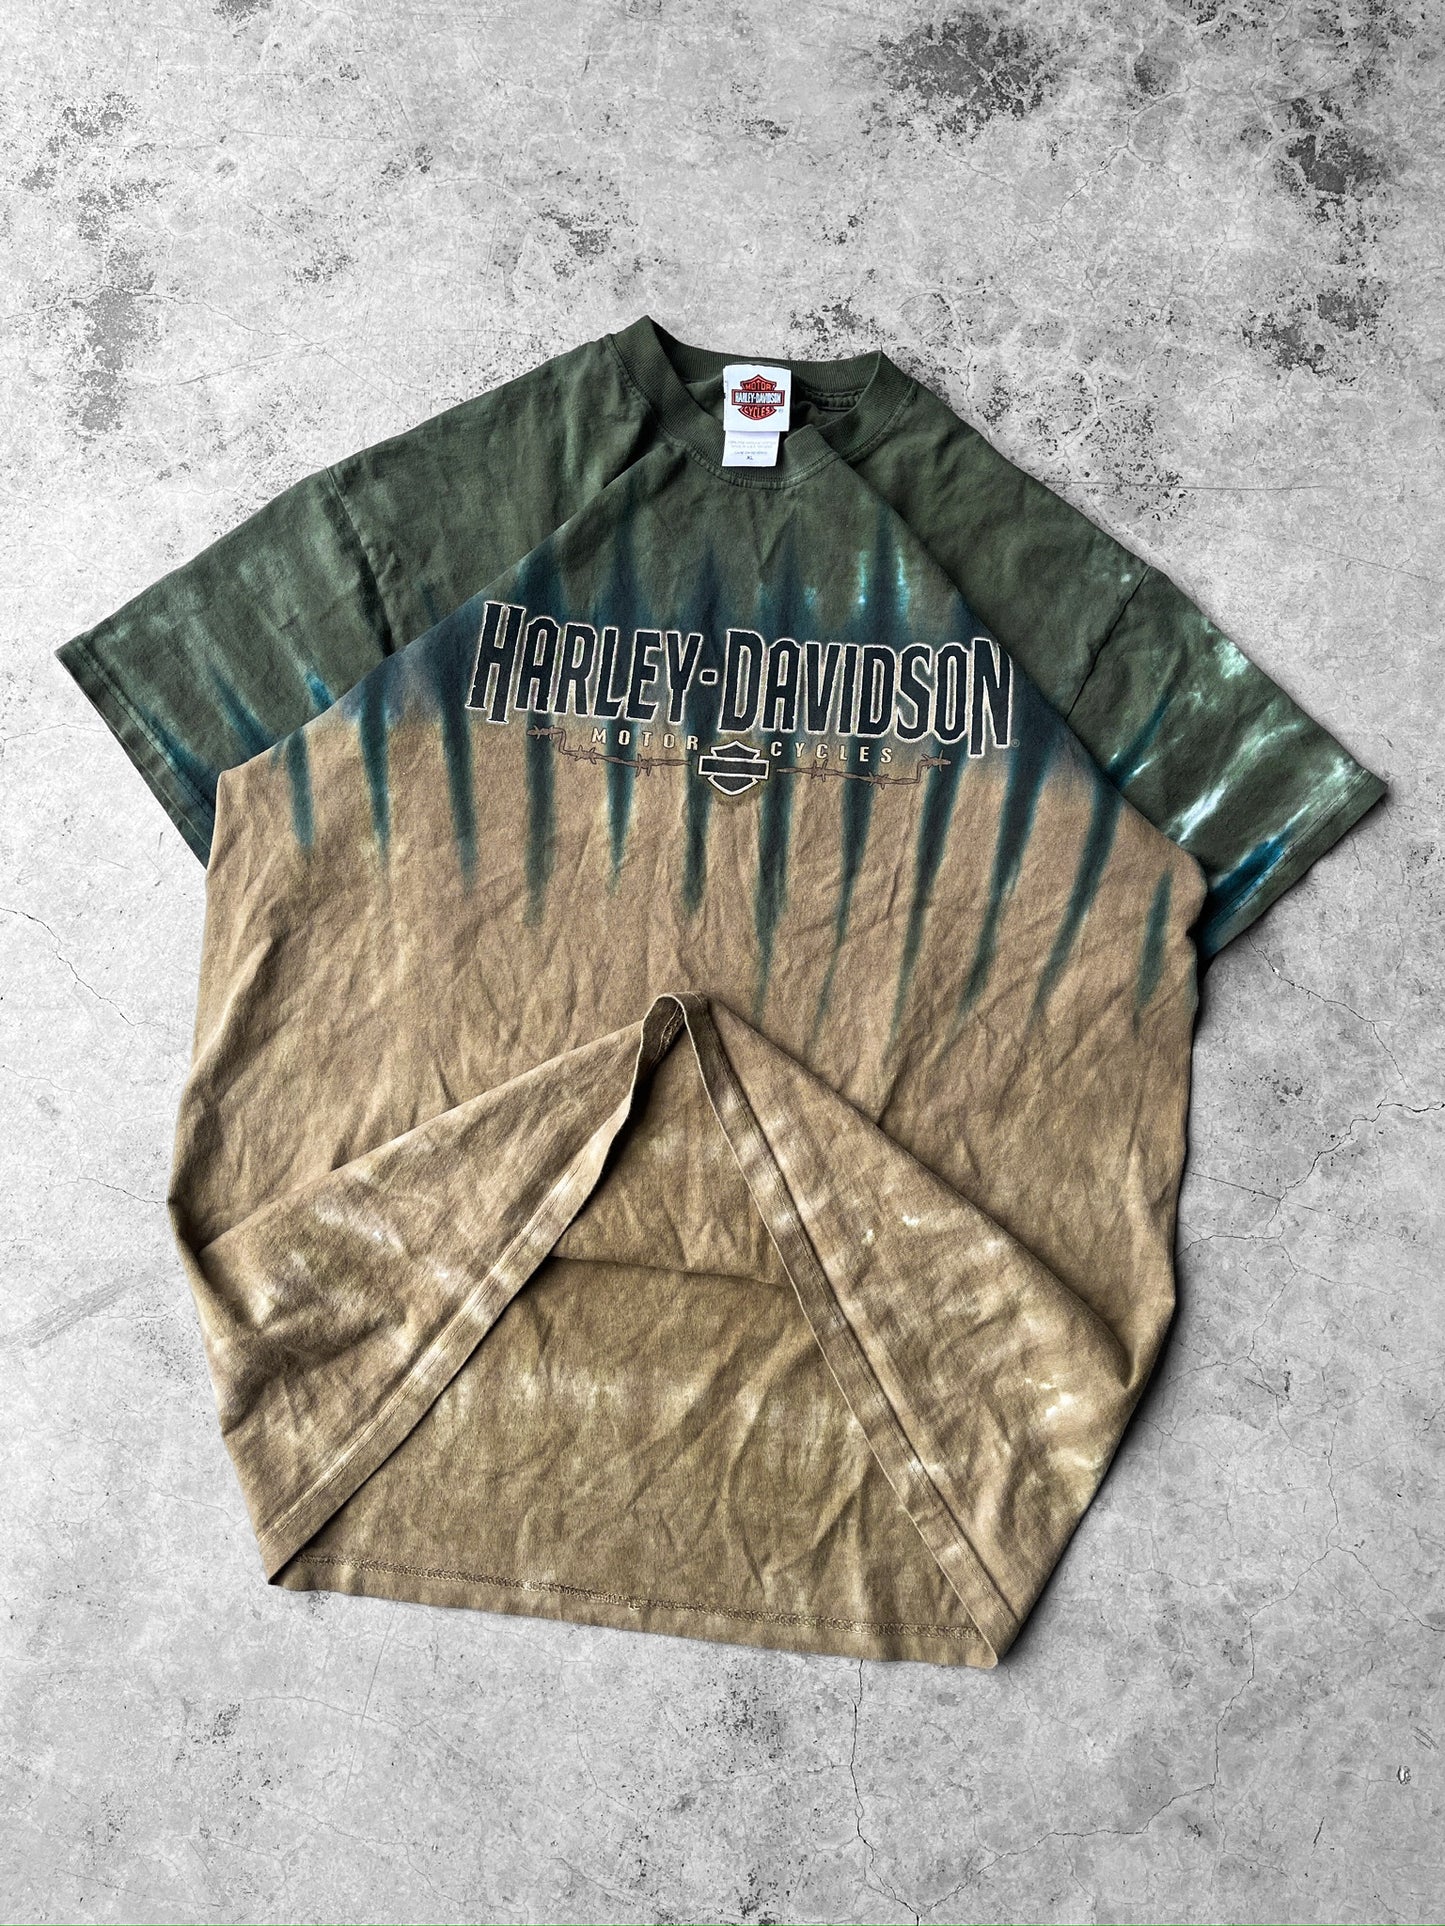 Harley Davidson Sadona Arizona Tie Dye Shirt - XL